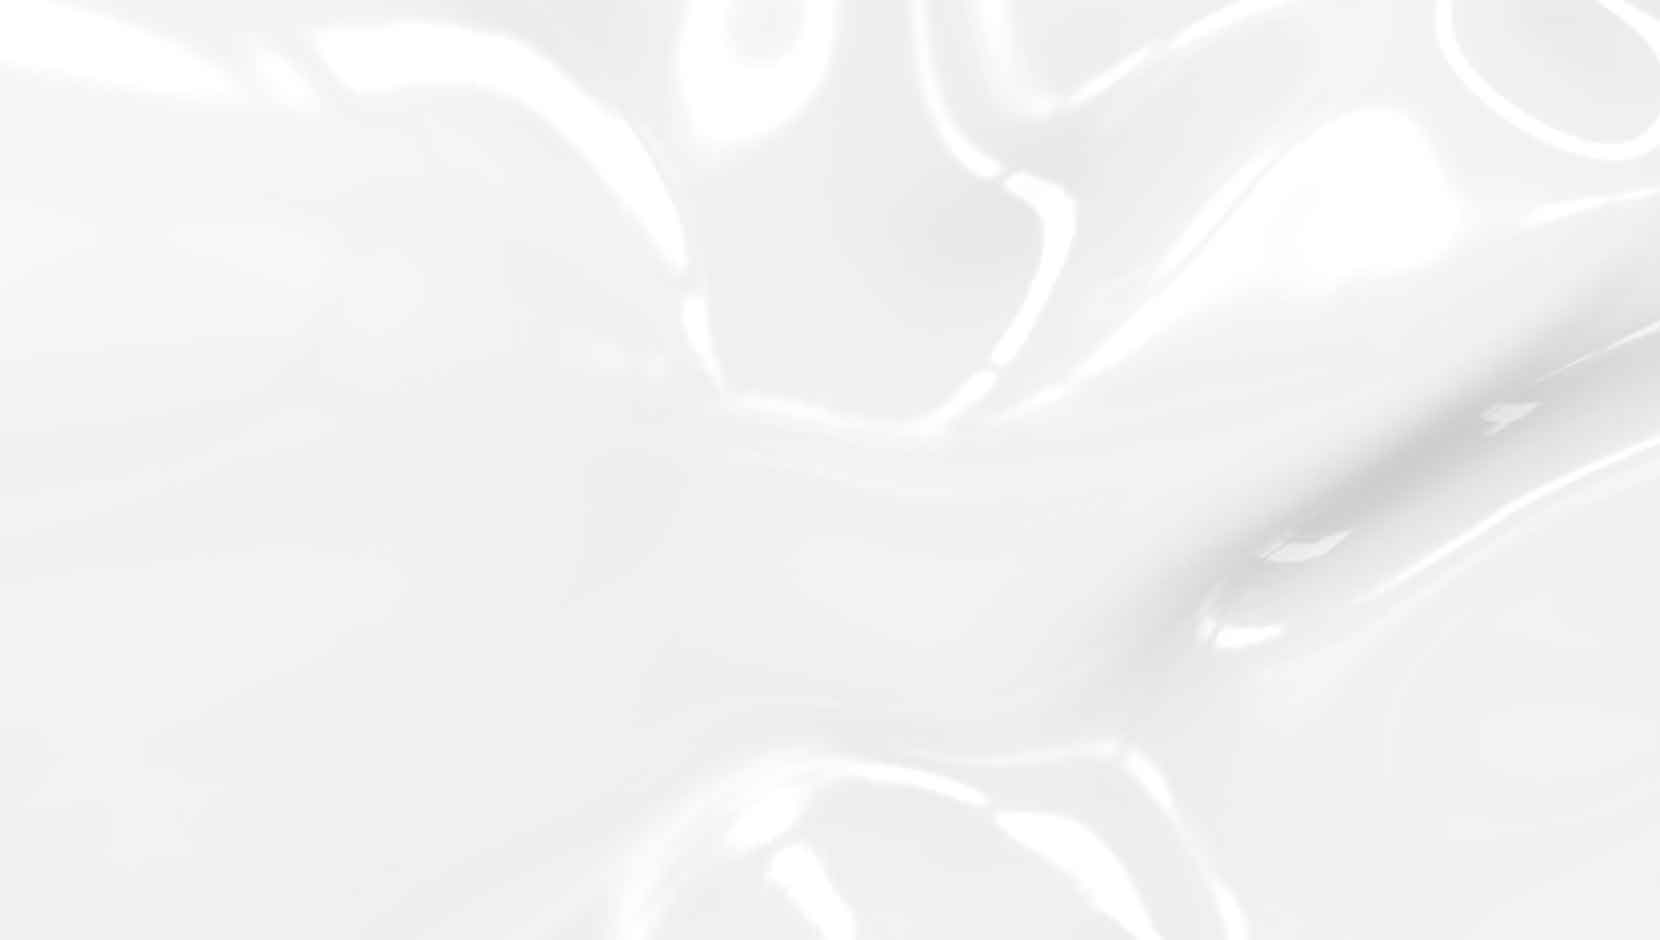 Slide background: swirls of white liquid.